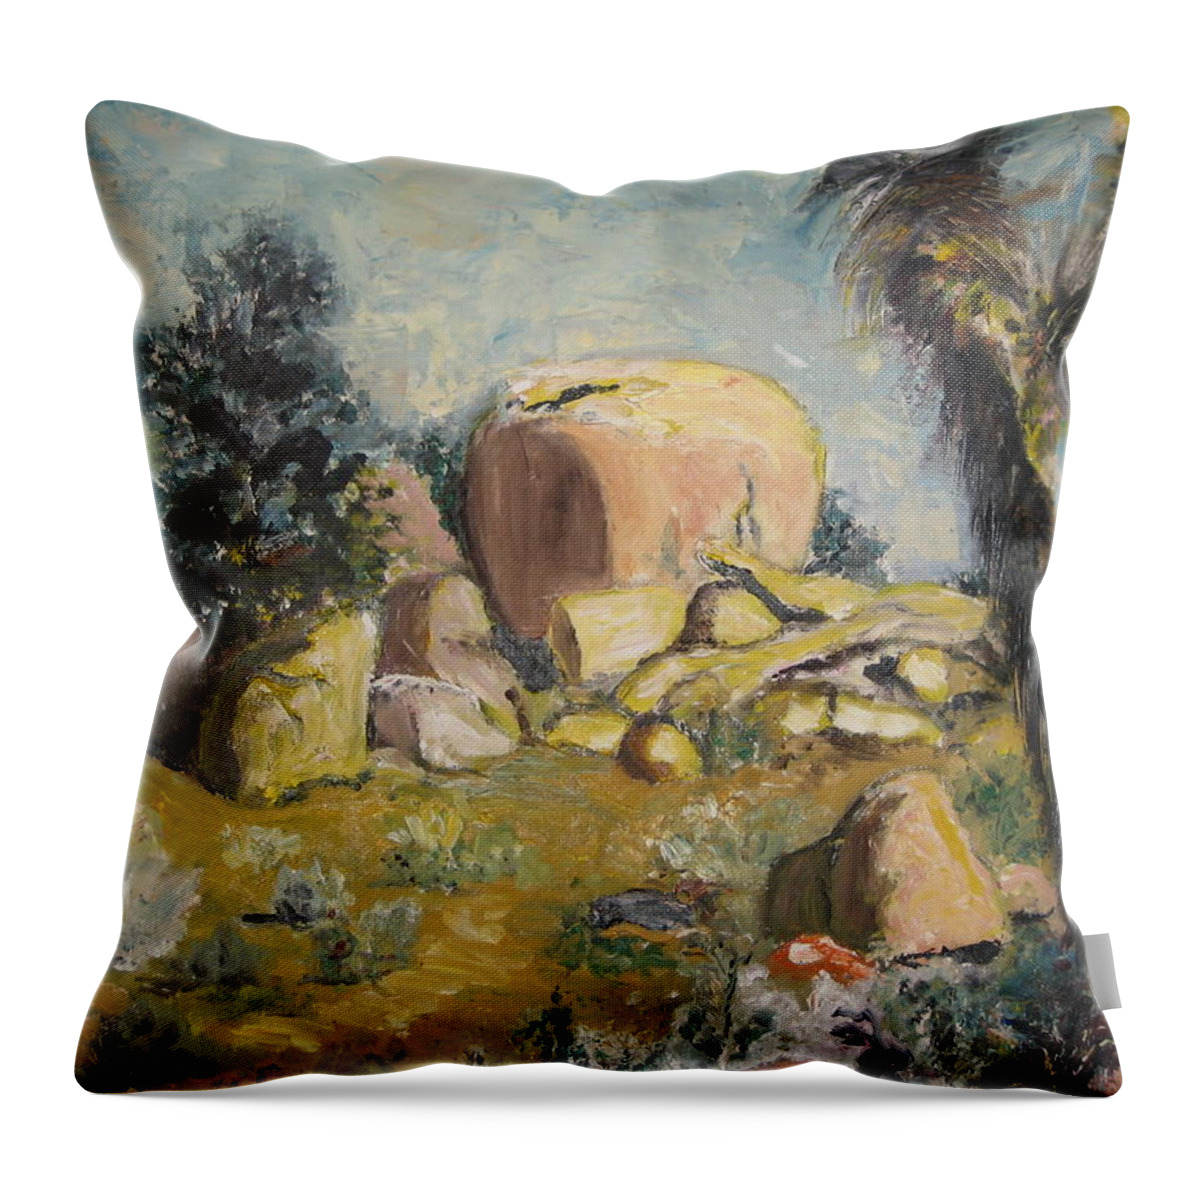 Desert Throw Pillow featuring the painting Skull Head by Barbara Prestridge